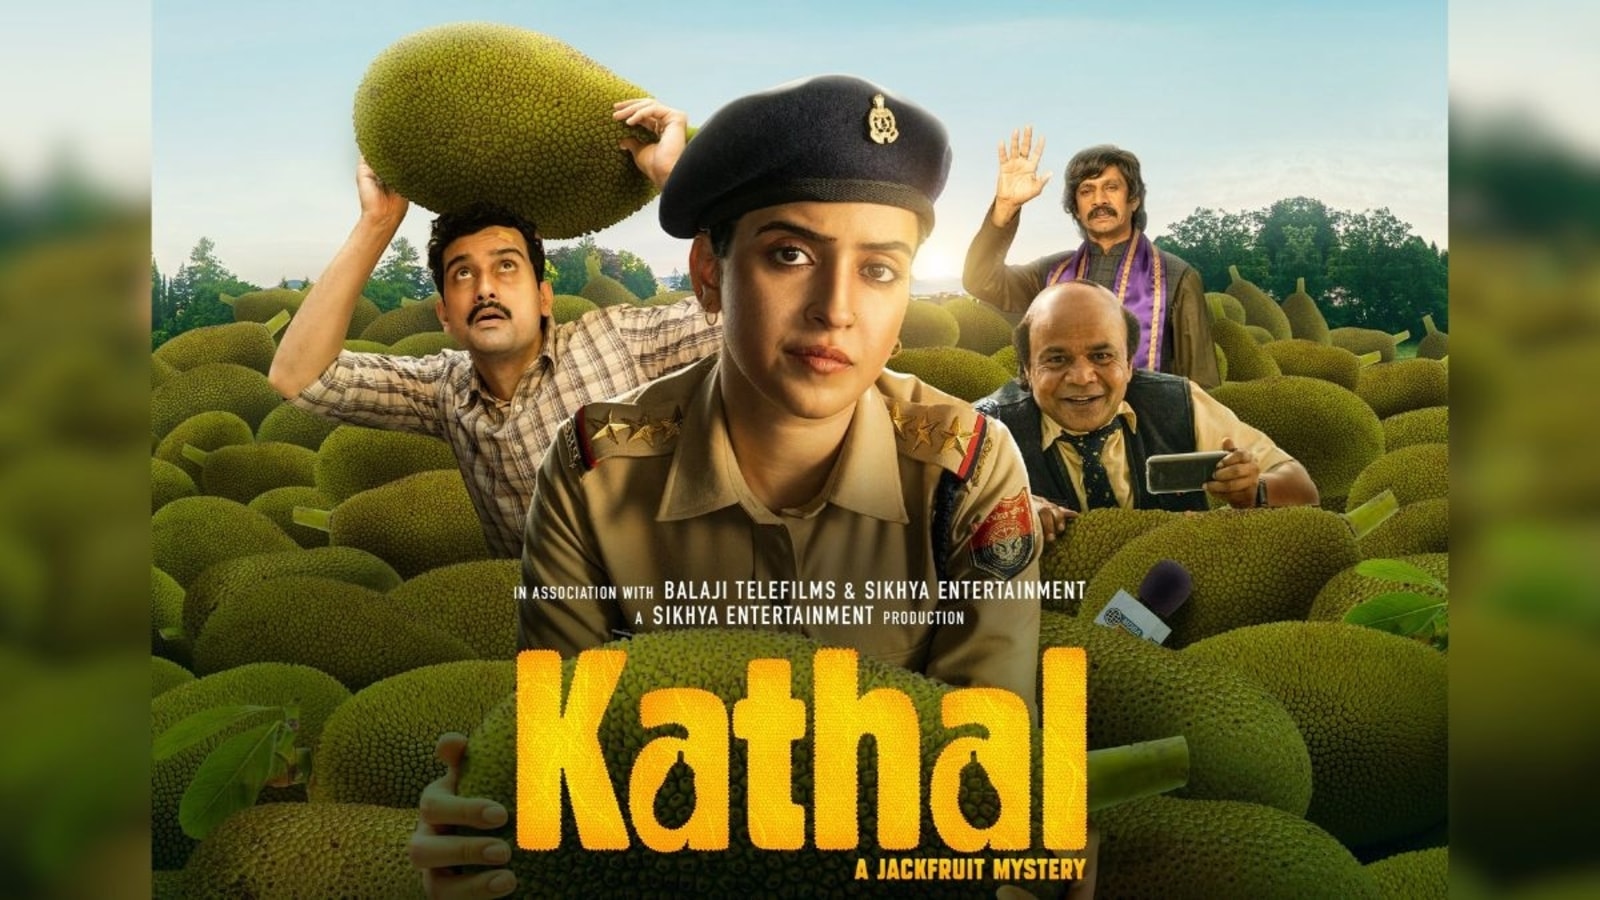 Do Not Watch This Movie! Kathal on Netflix | Propaganda Busted | #shorts  #shortvideo #netflix - YouTube